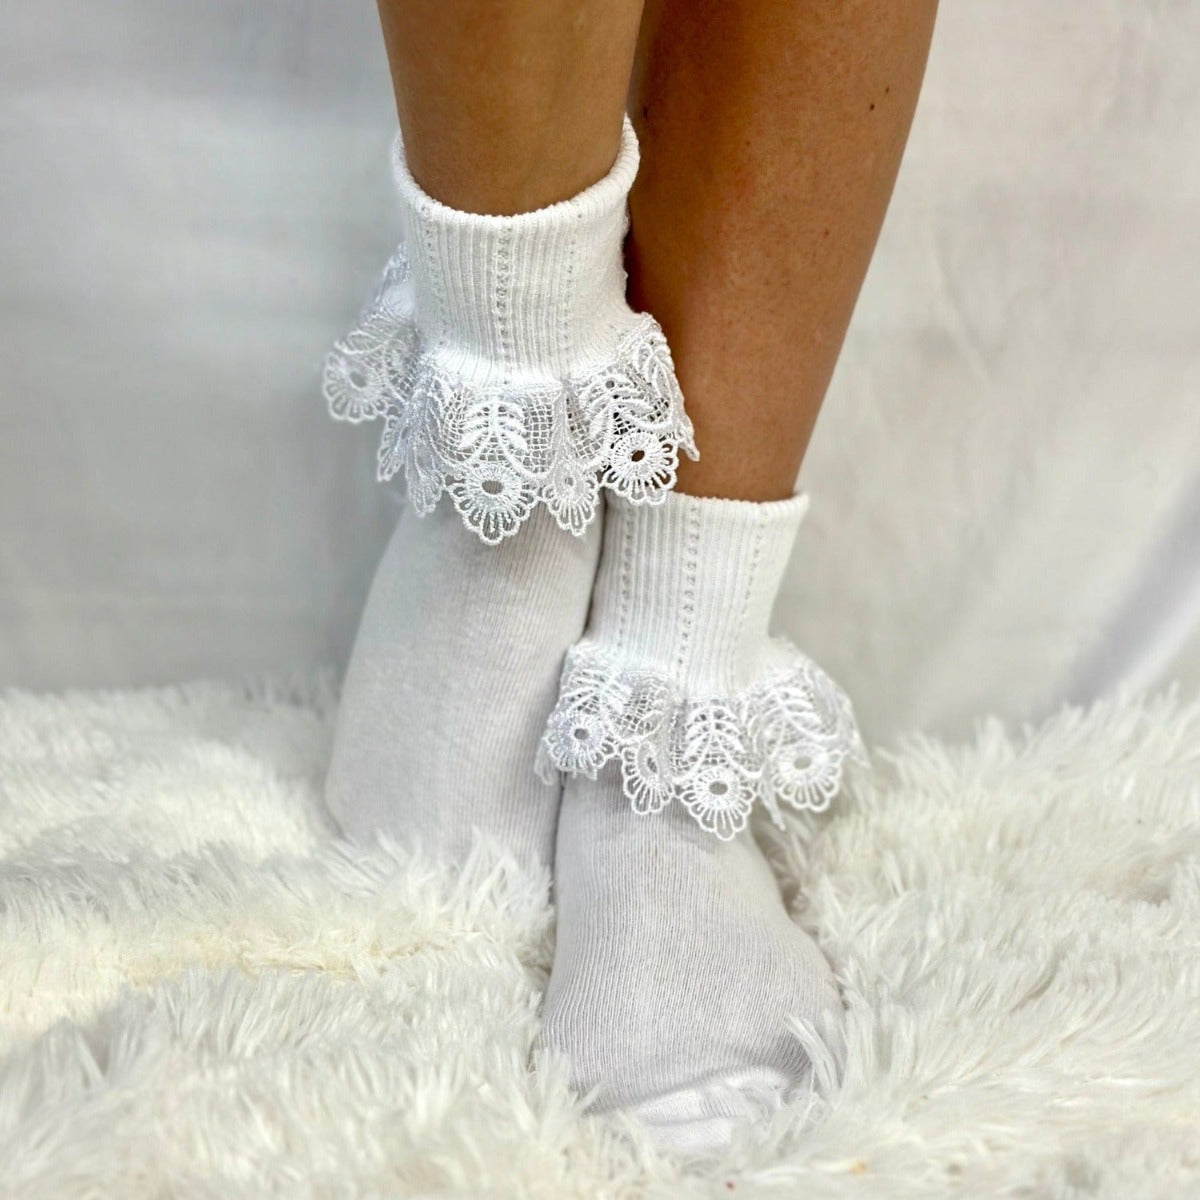 Blossom signature lace socks white quality fashion hosiery , Catherine Cole Atelier, crew women's lace socks best quality.